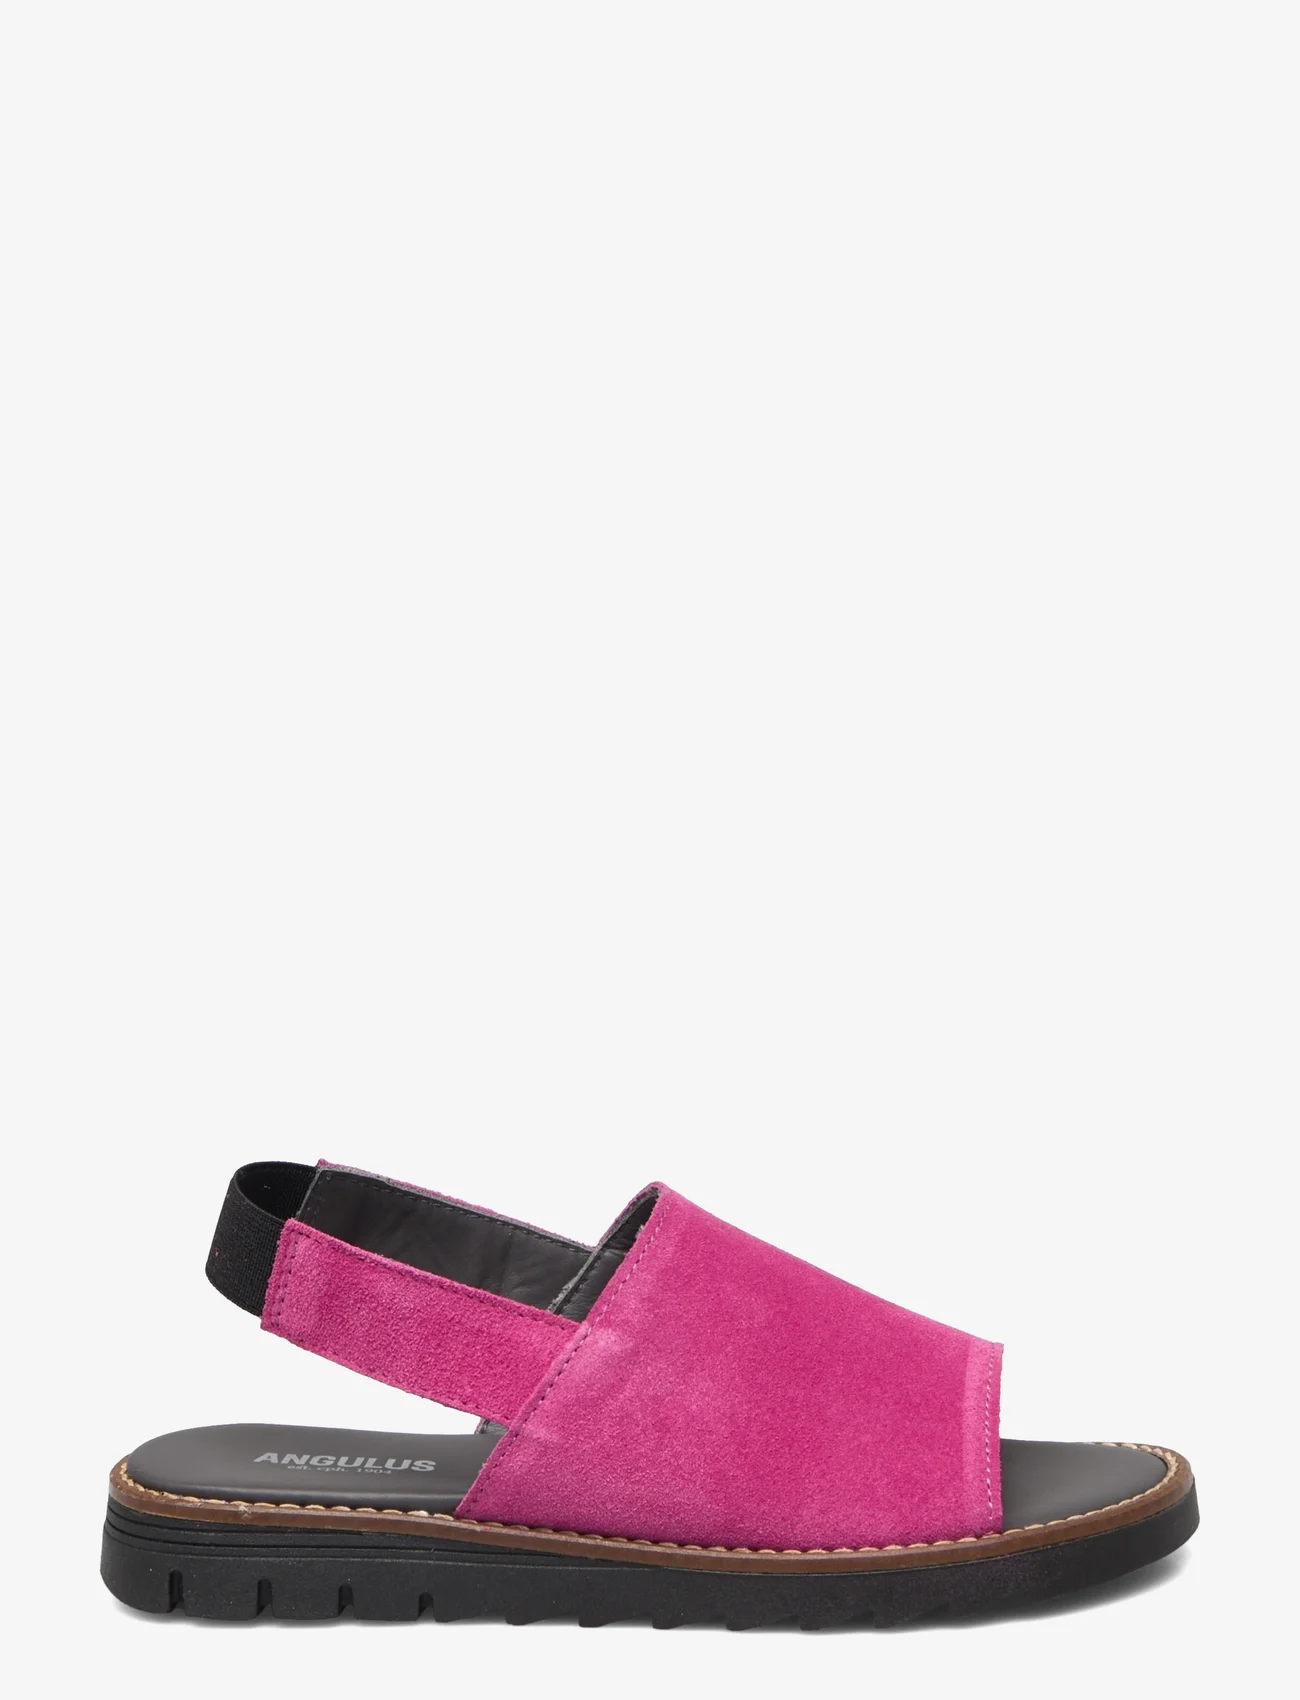 ANGULUS - Sandals - flat - open toe - op - gode sommertilbud - 1150 pink - 1